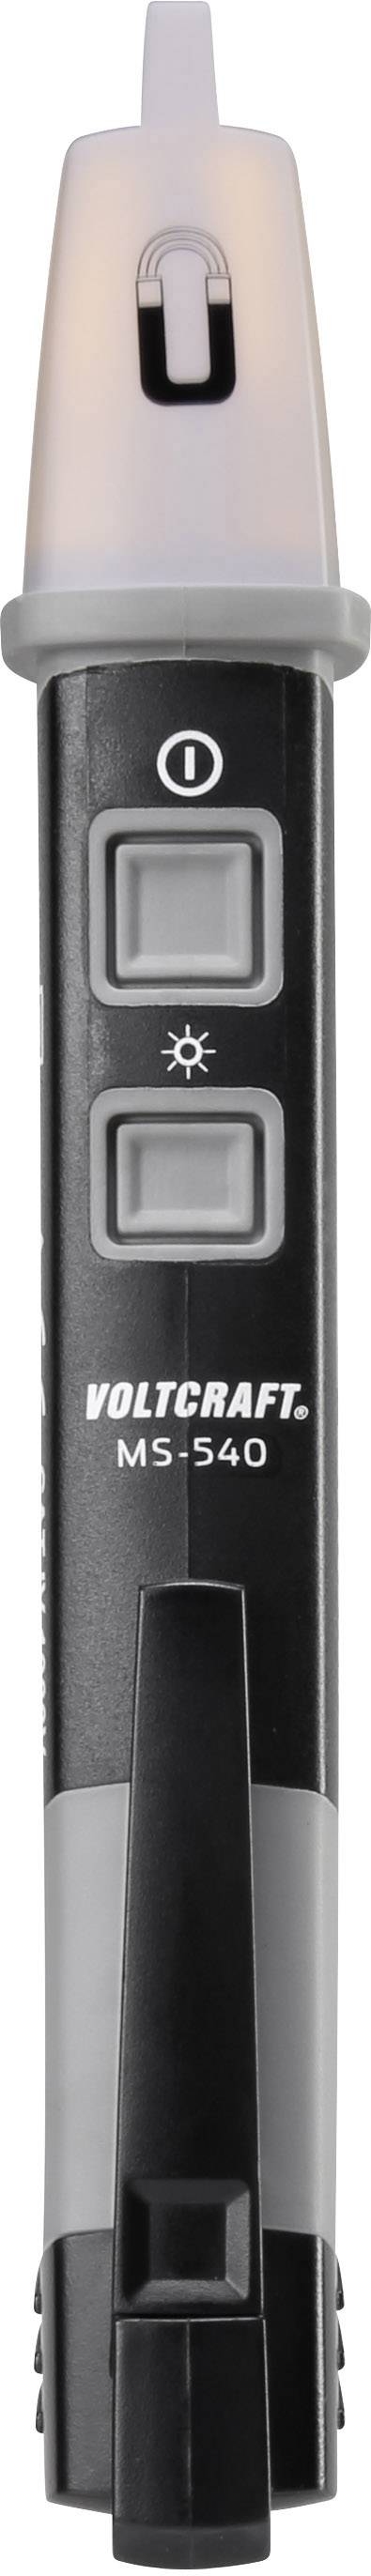 VOLTCRAFT MS-540 Berührungsloser Spannungsprüfer CAT IV 1000 V LED, Akustik, Vibration